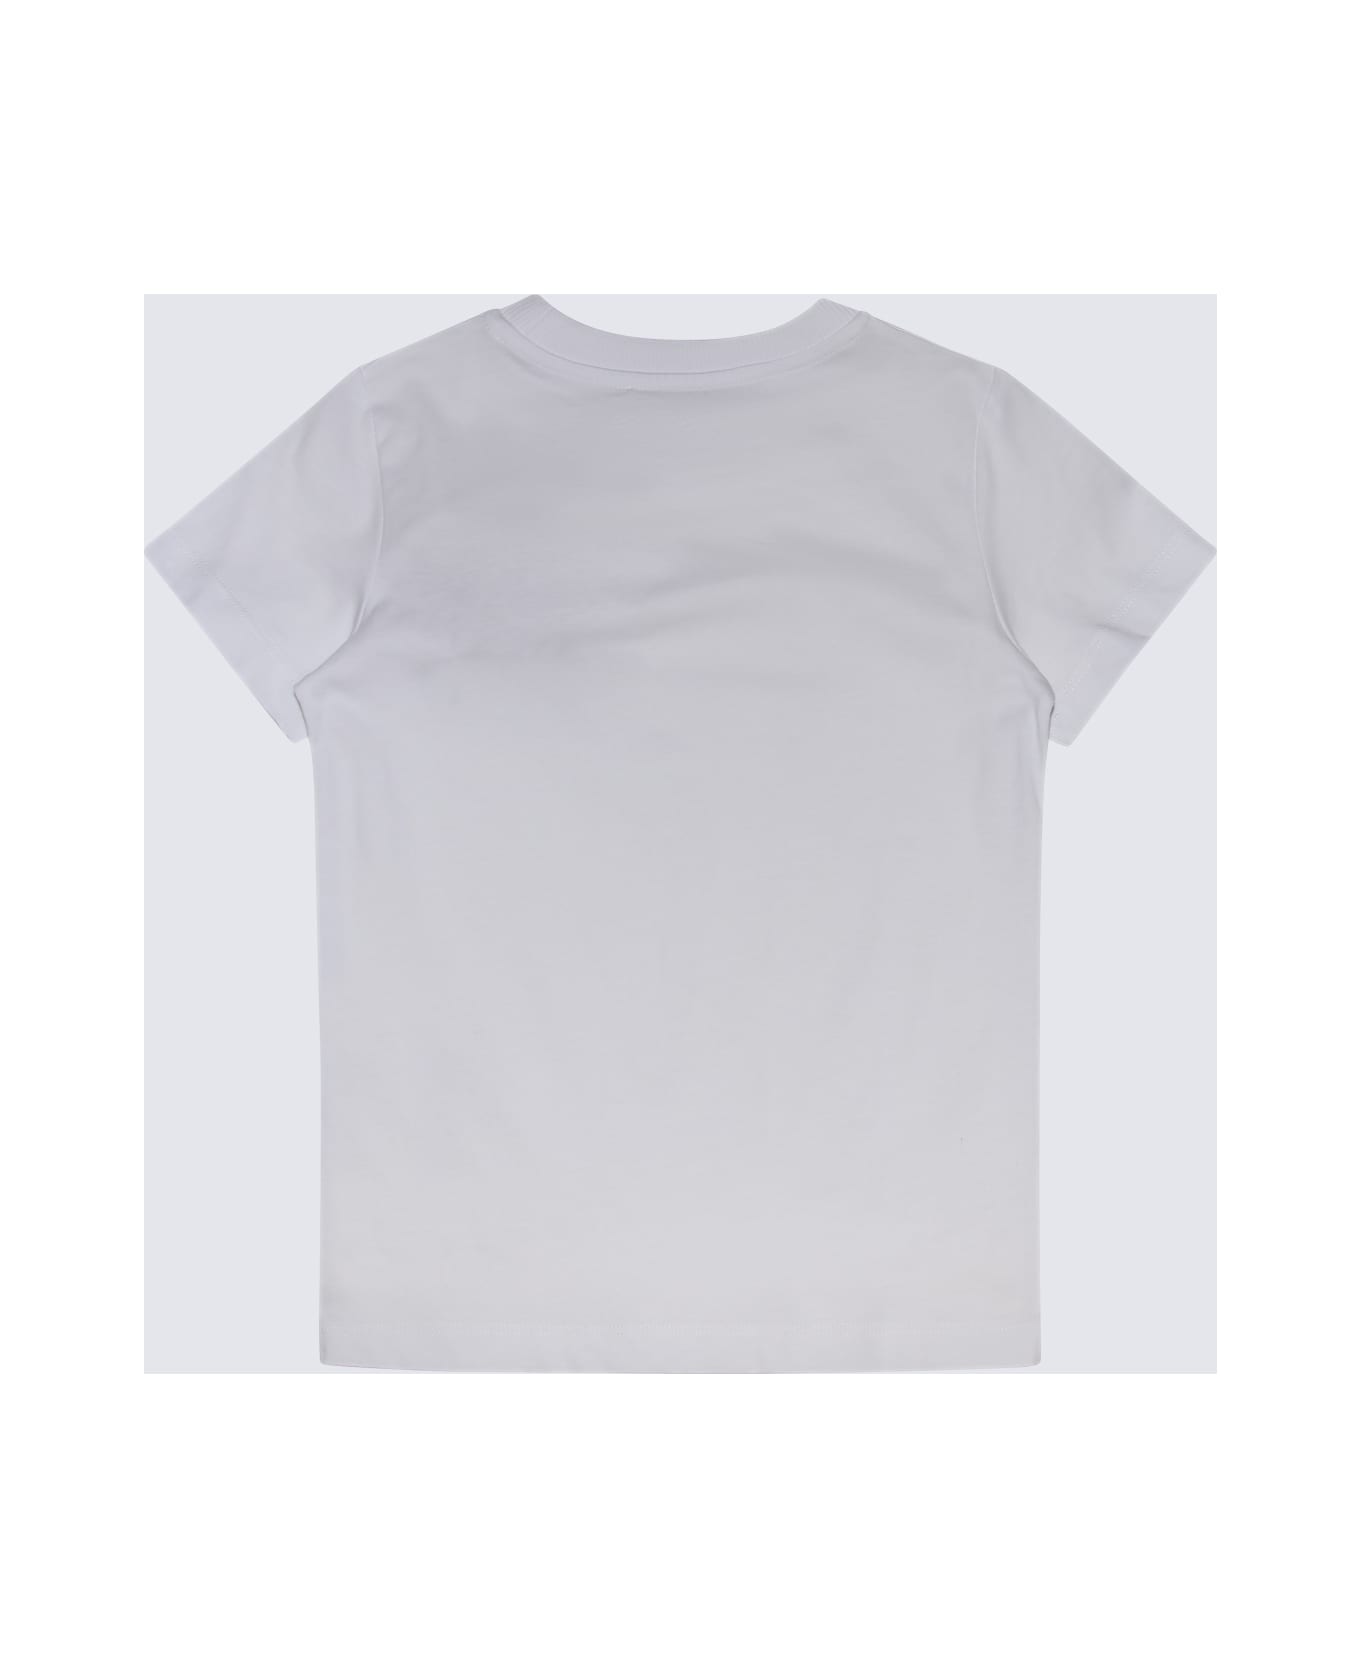 Moschino White Headwear T-shirt - White